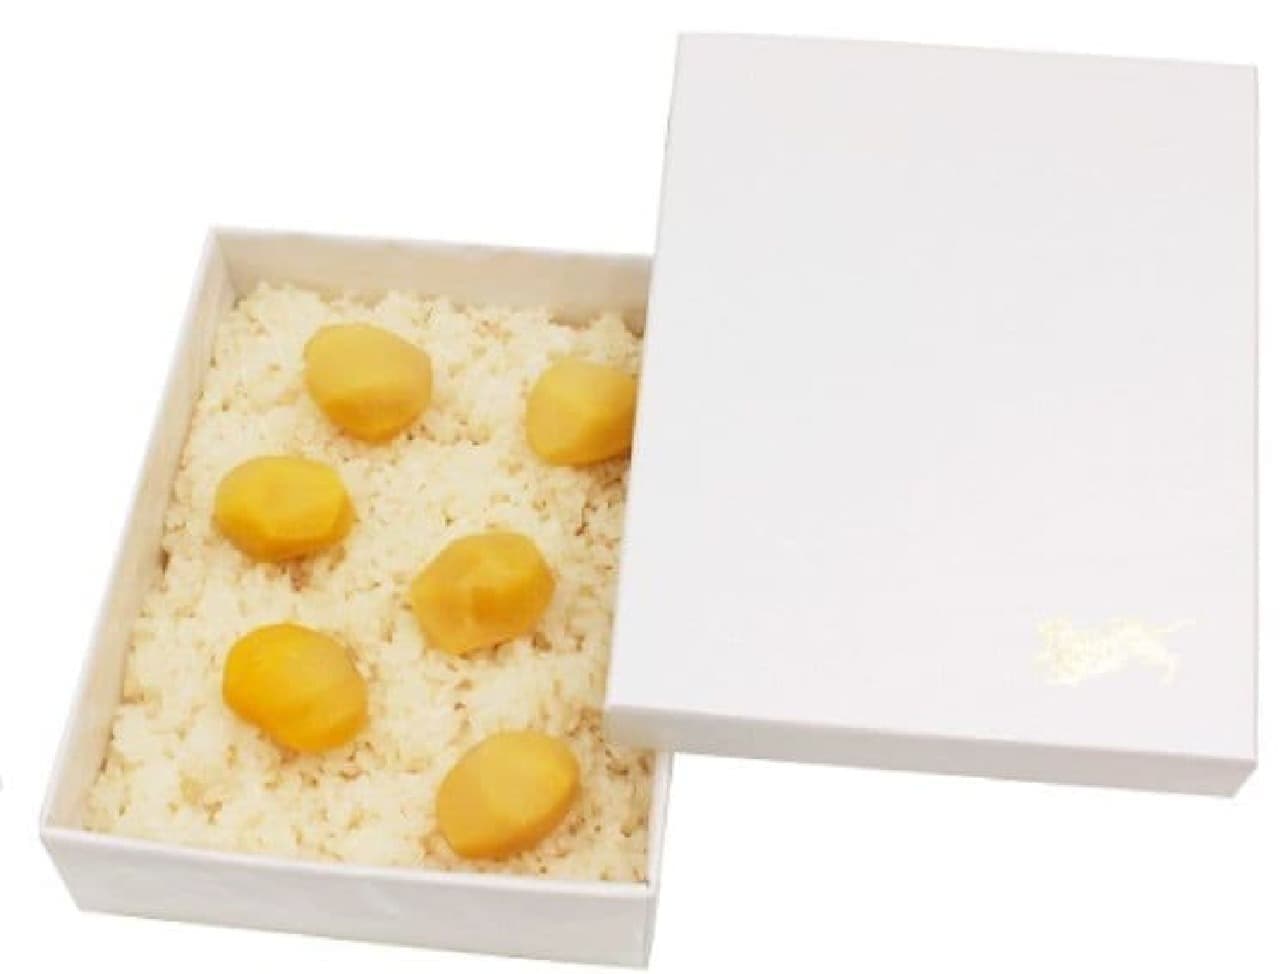 Chestnut rice in a cosmetic box by Toraya